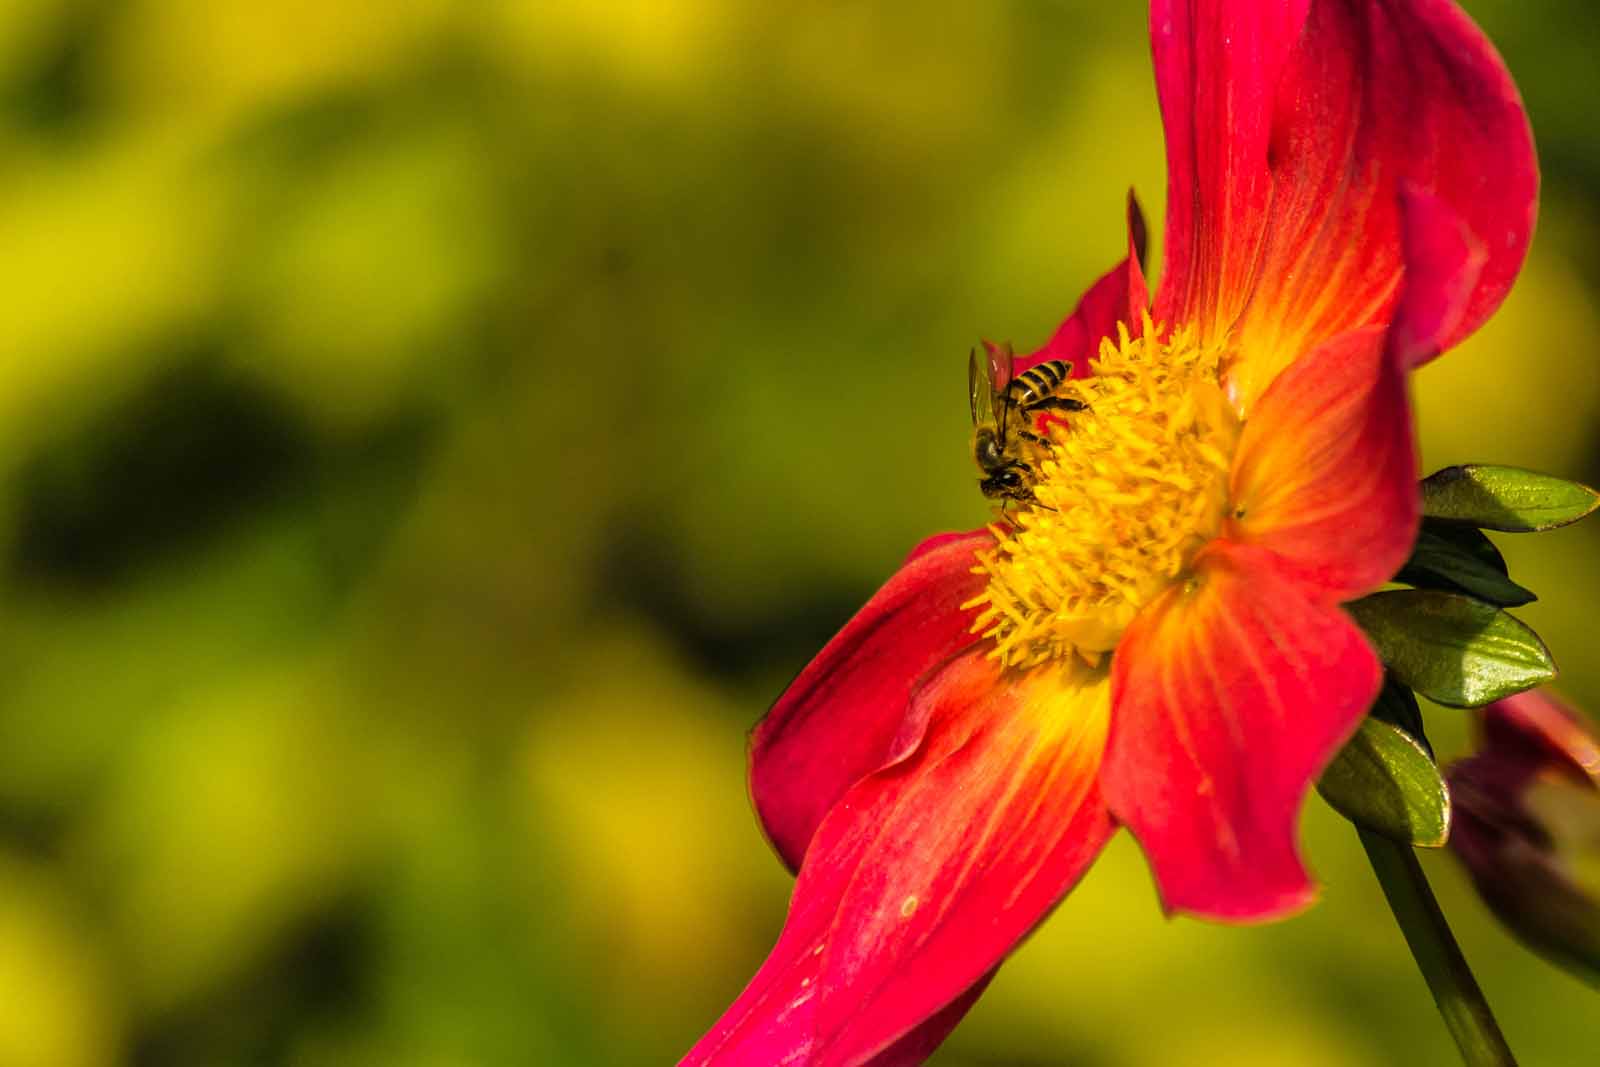 Honeybee pollination